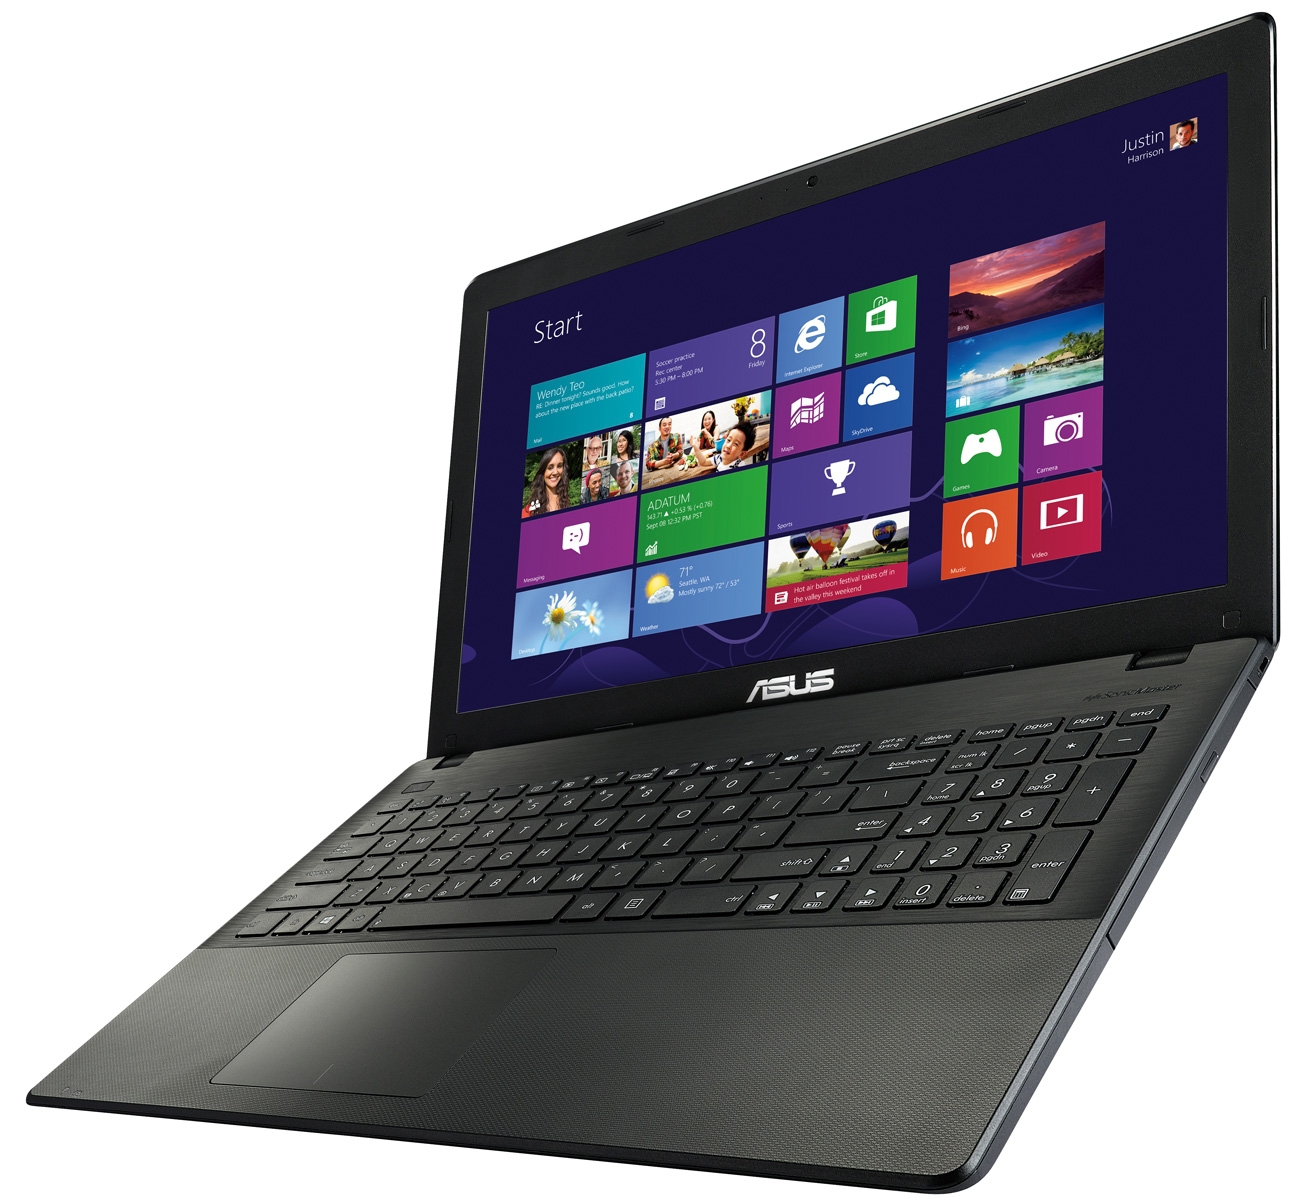 ASUS X551M budget laptop